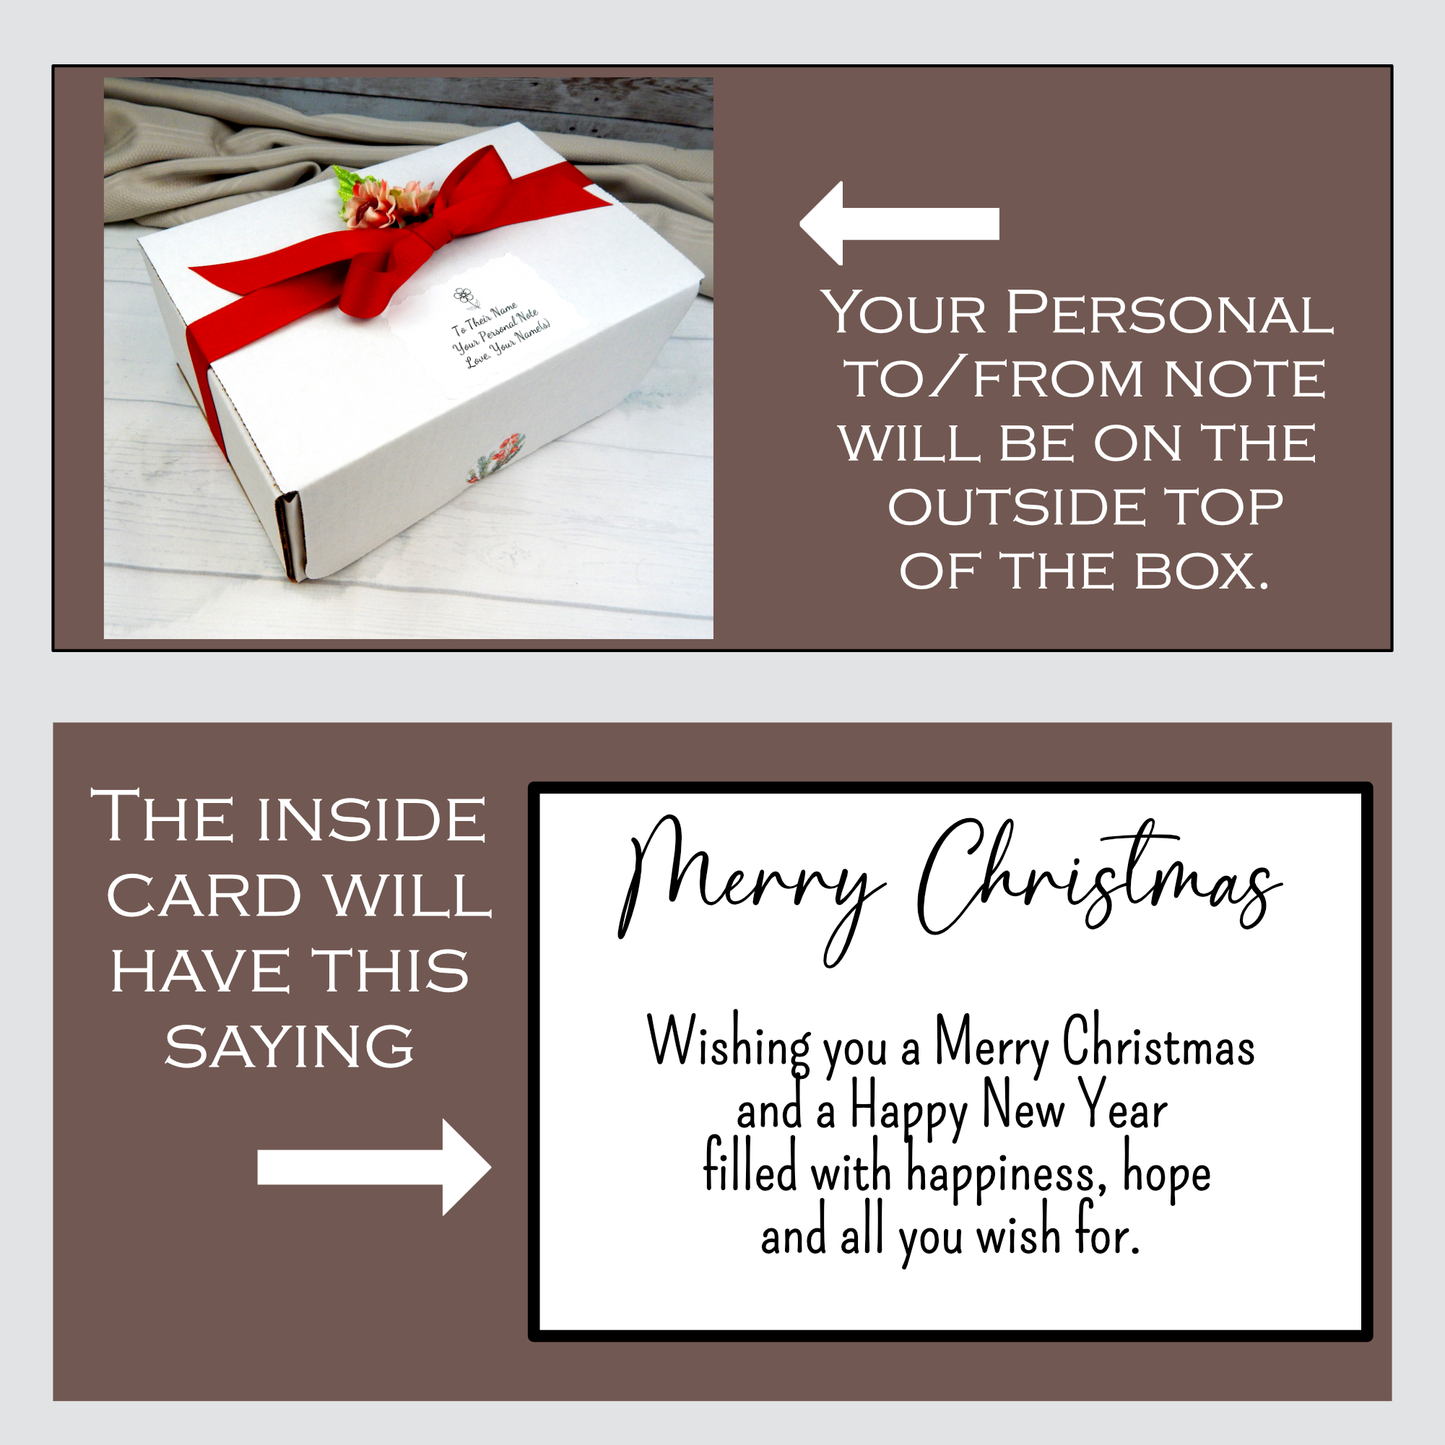 Corporate Christmas Gift Box with Personalized Coffee Mug